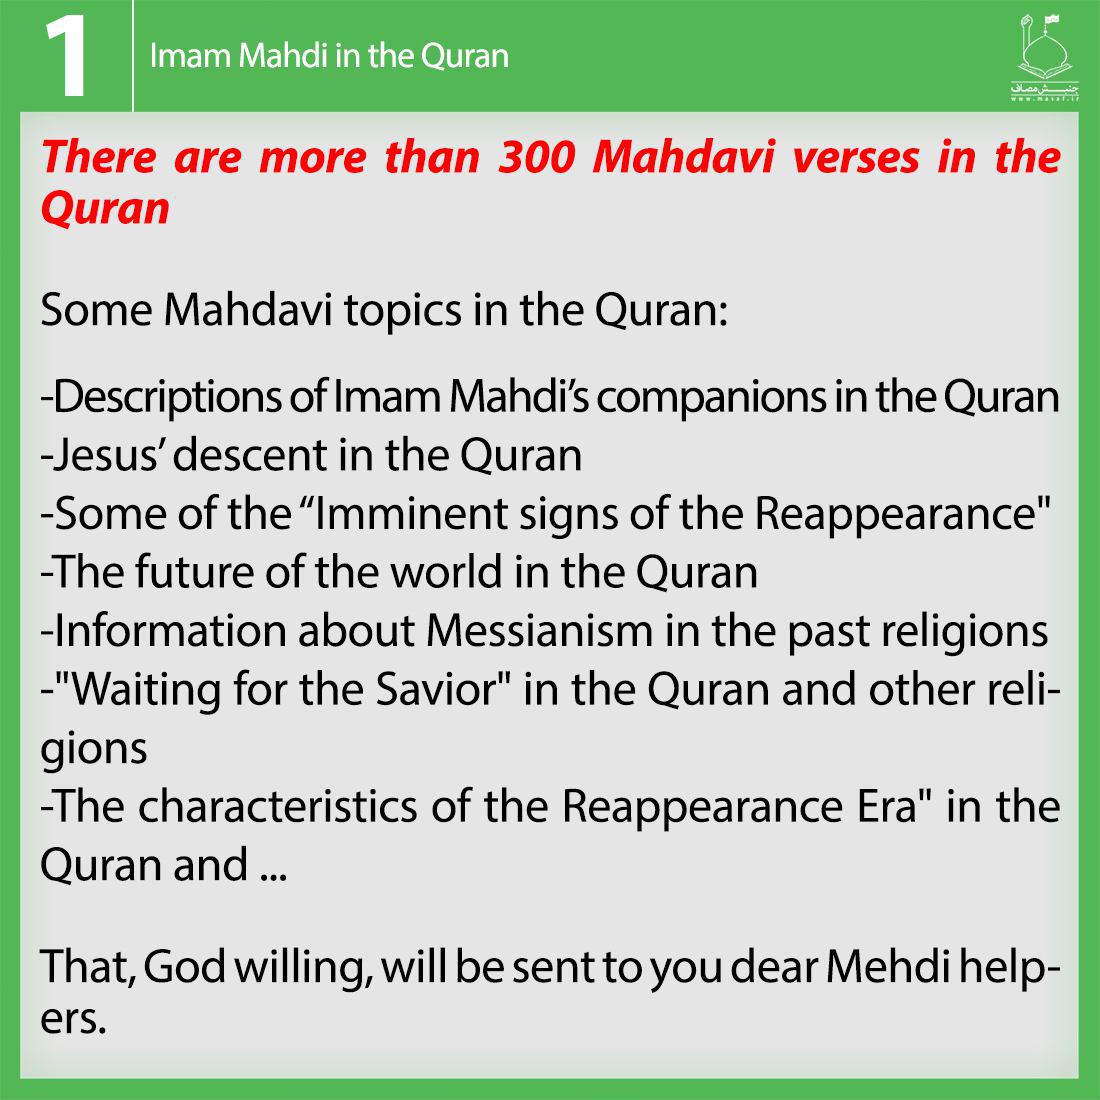 imam mahdi in the quran